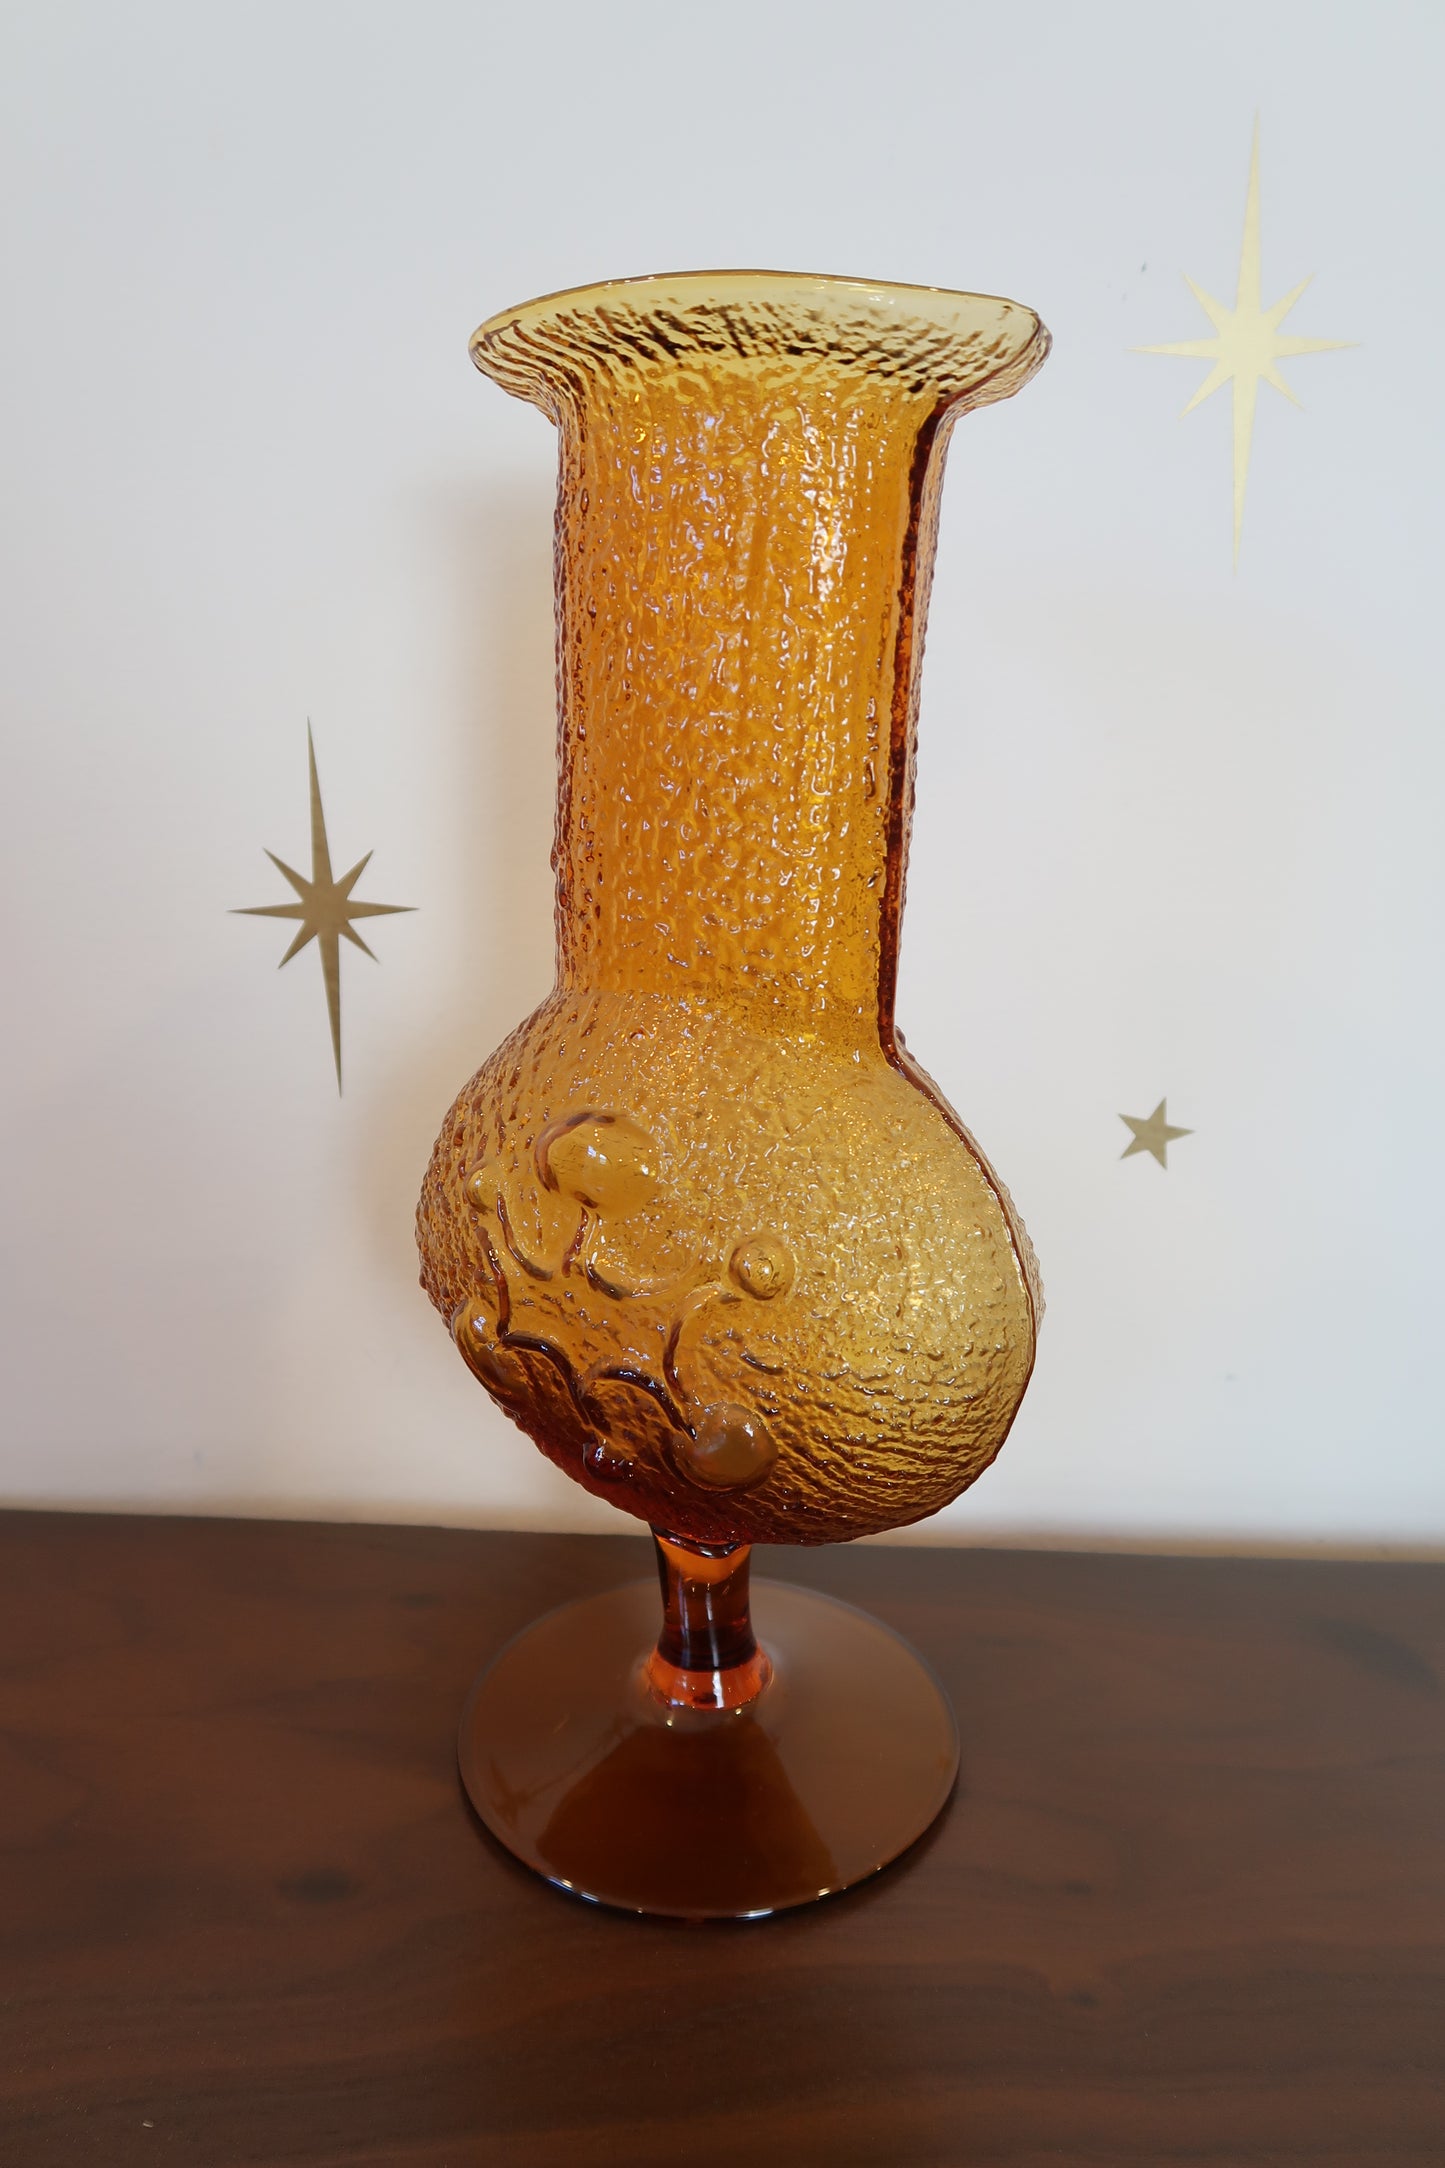 Stelvia “Antigua" Vase by Wayne Husted